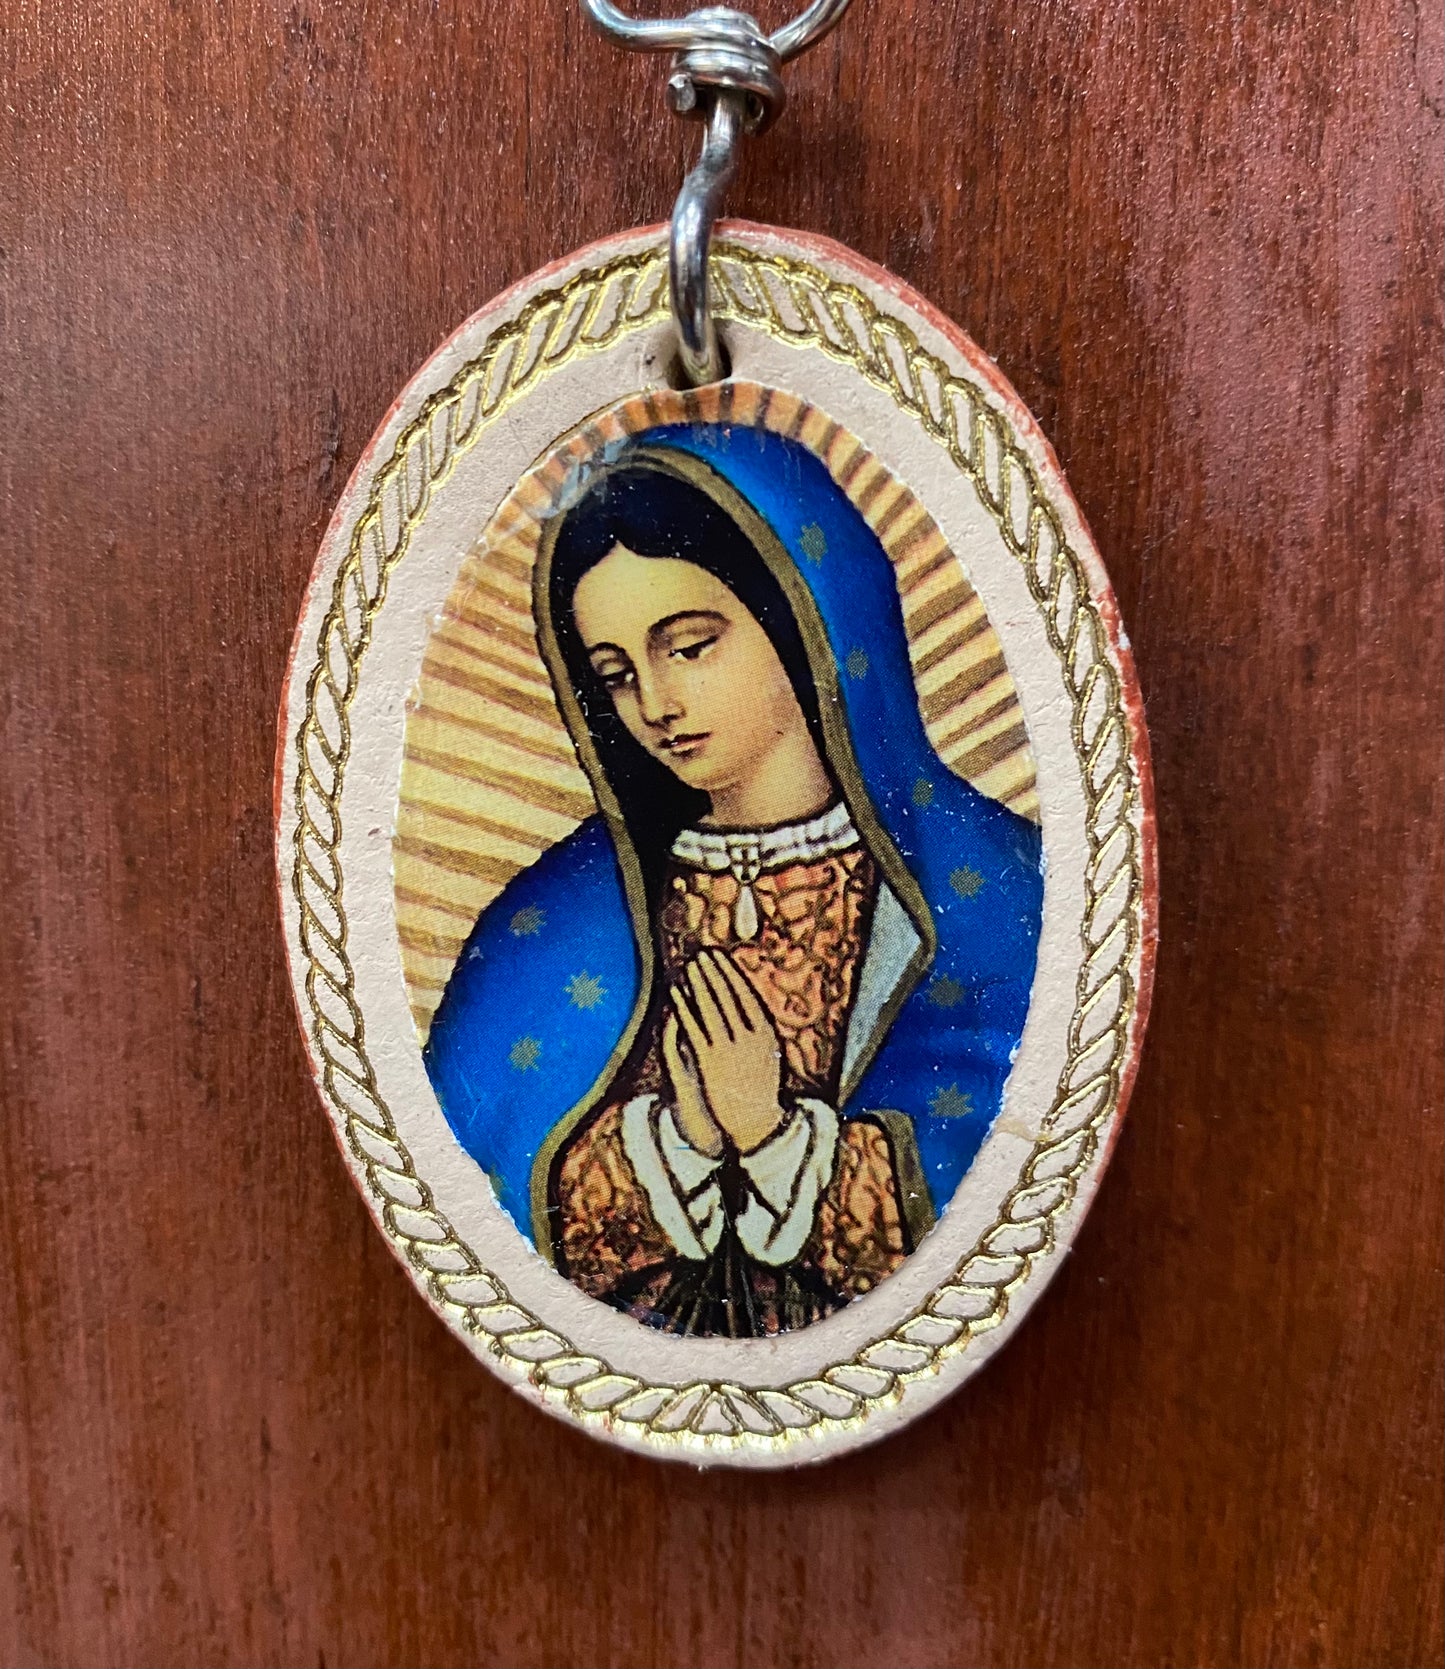 Virgen de Guadalupe Face with Blue Mantel Key Chain